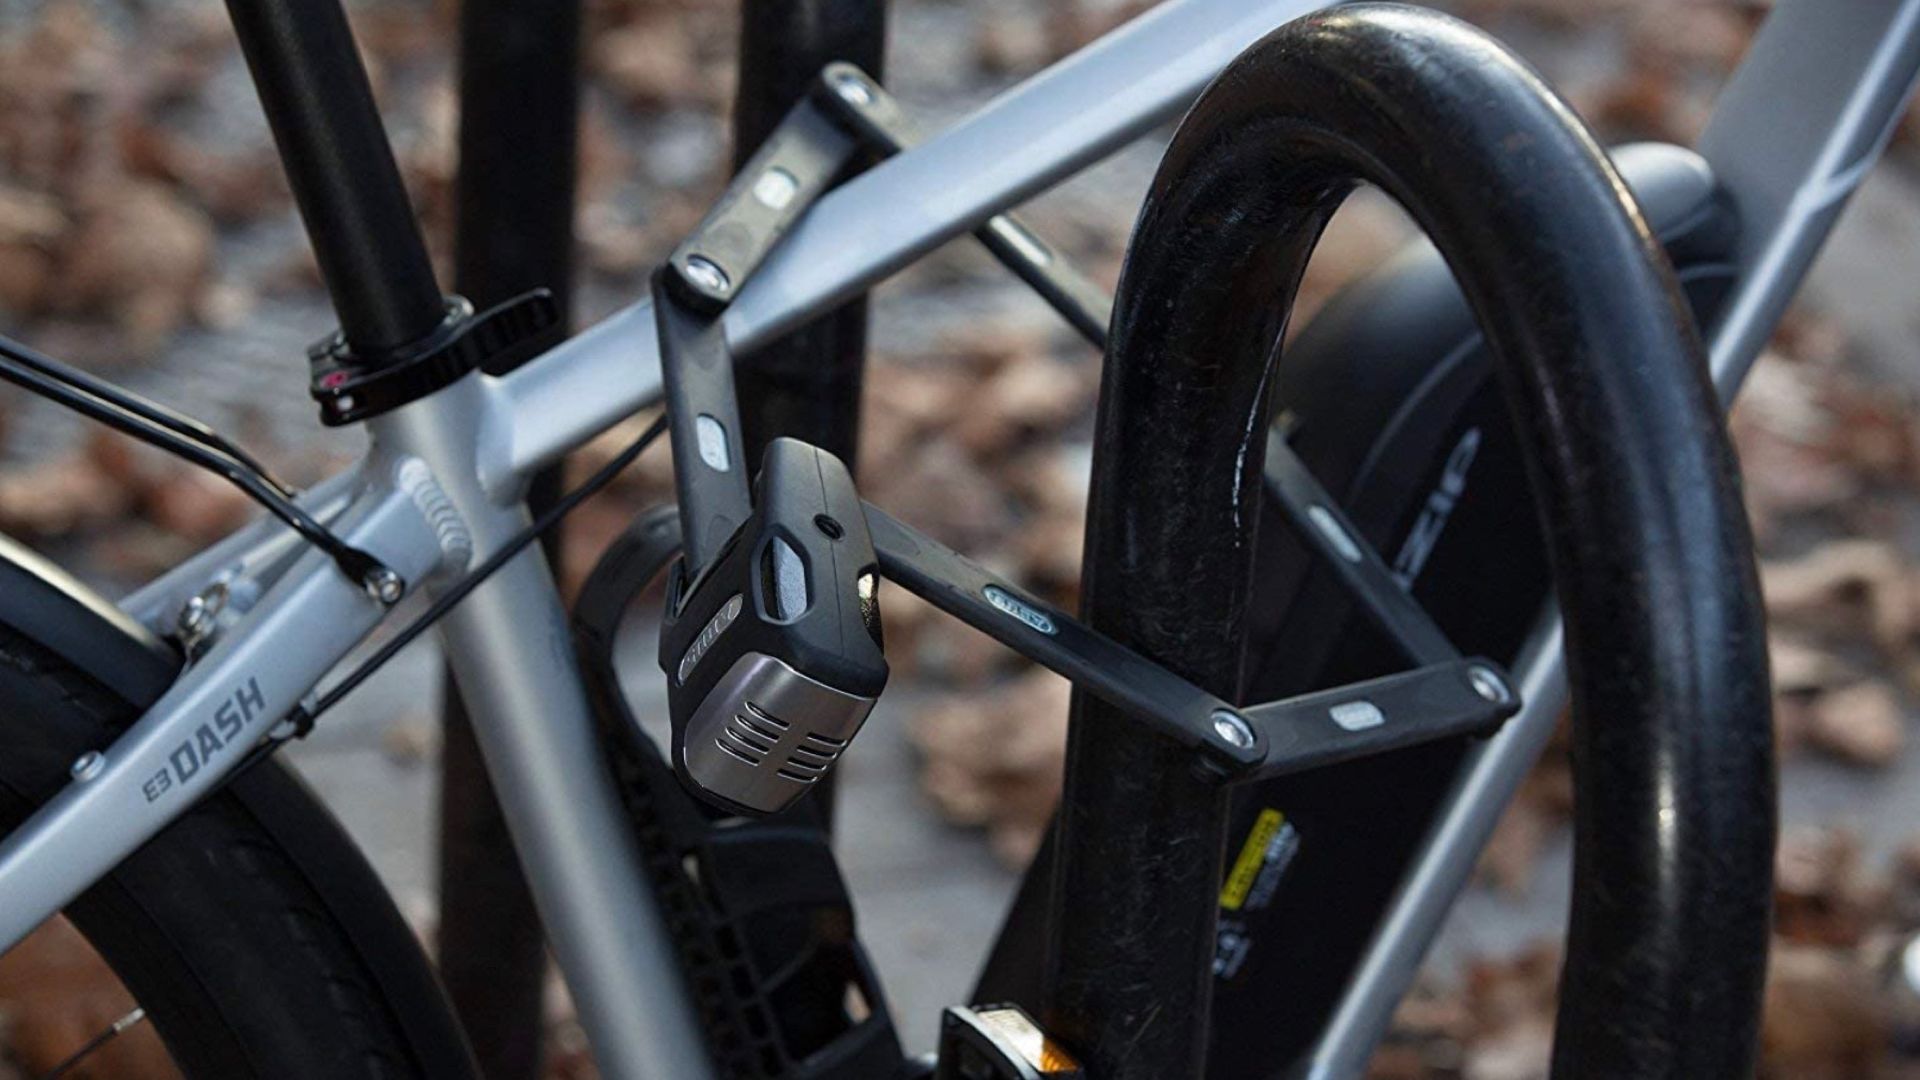 ABUS folding bike lock attached to a bike rack.